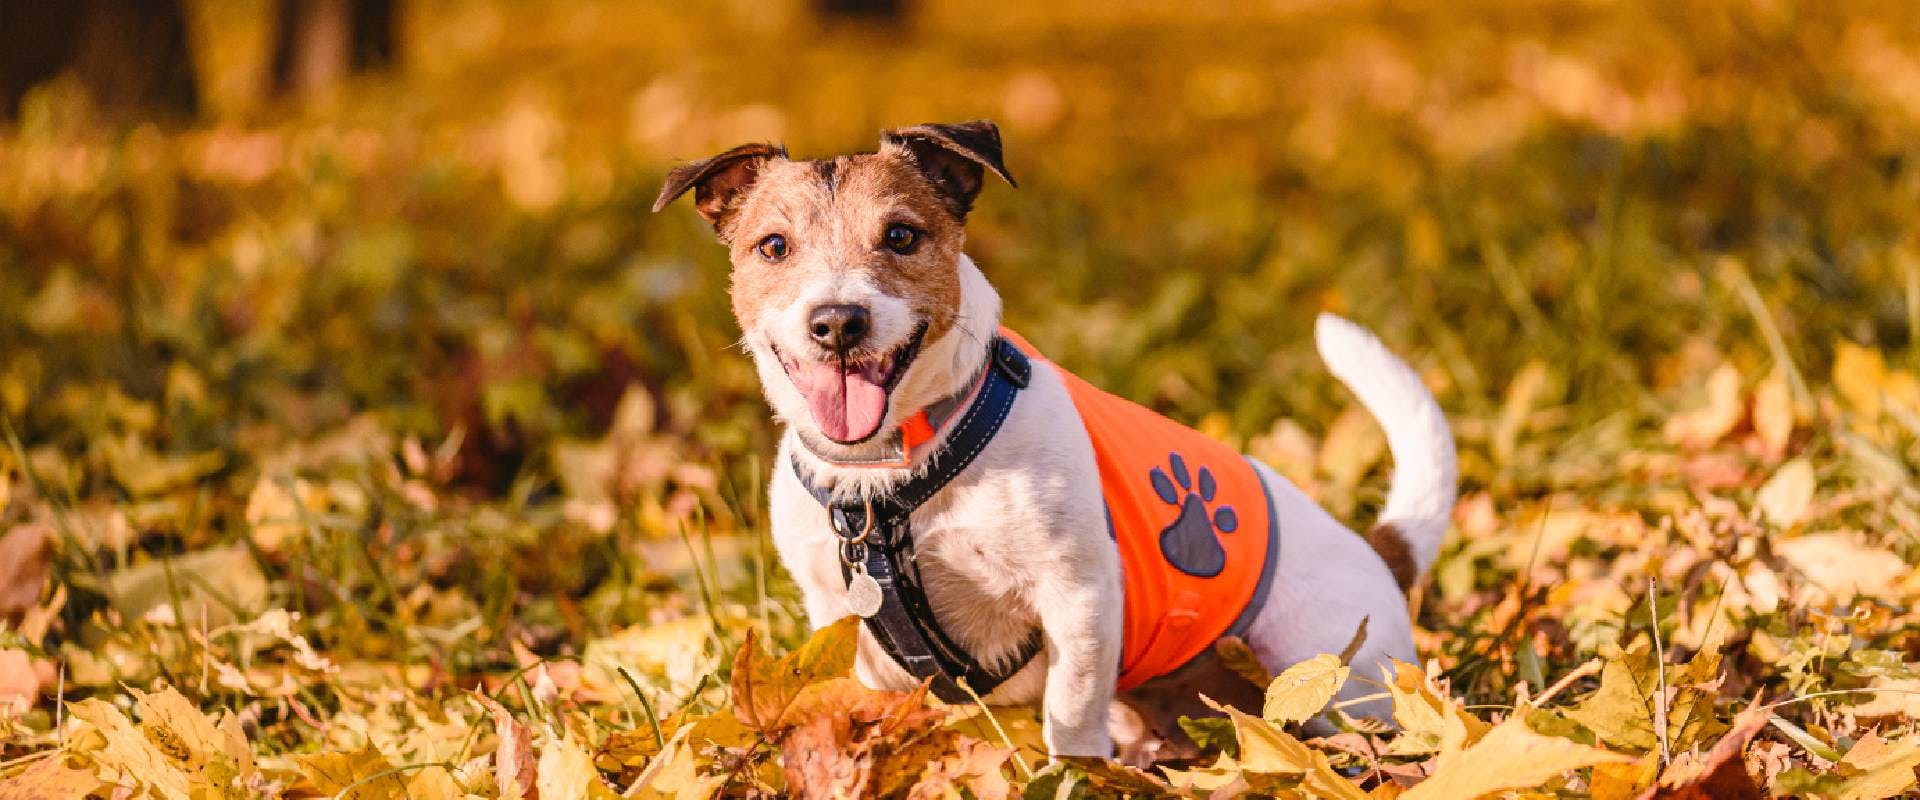 Happy dog sitting in Fall park wearing orange reflective vest